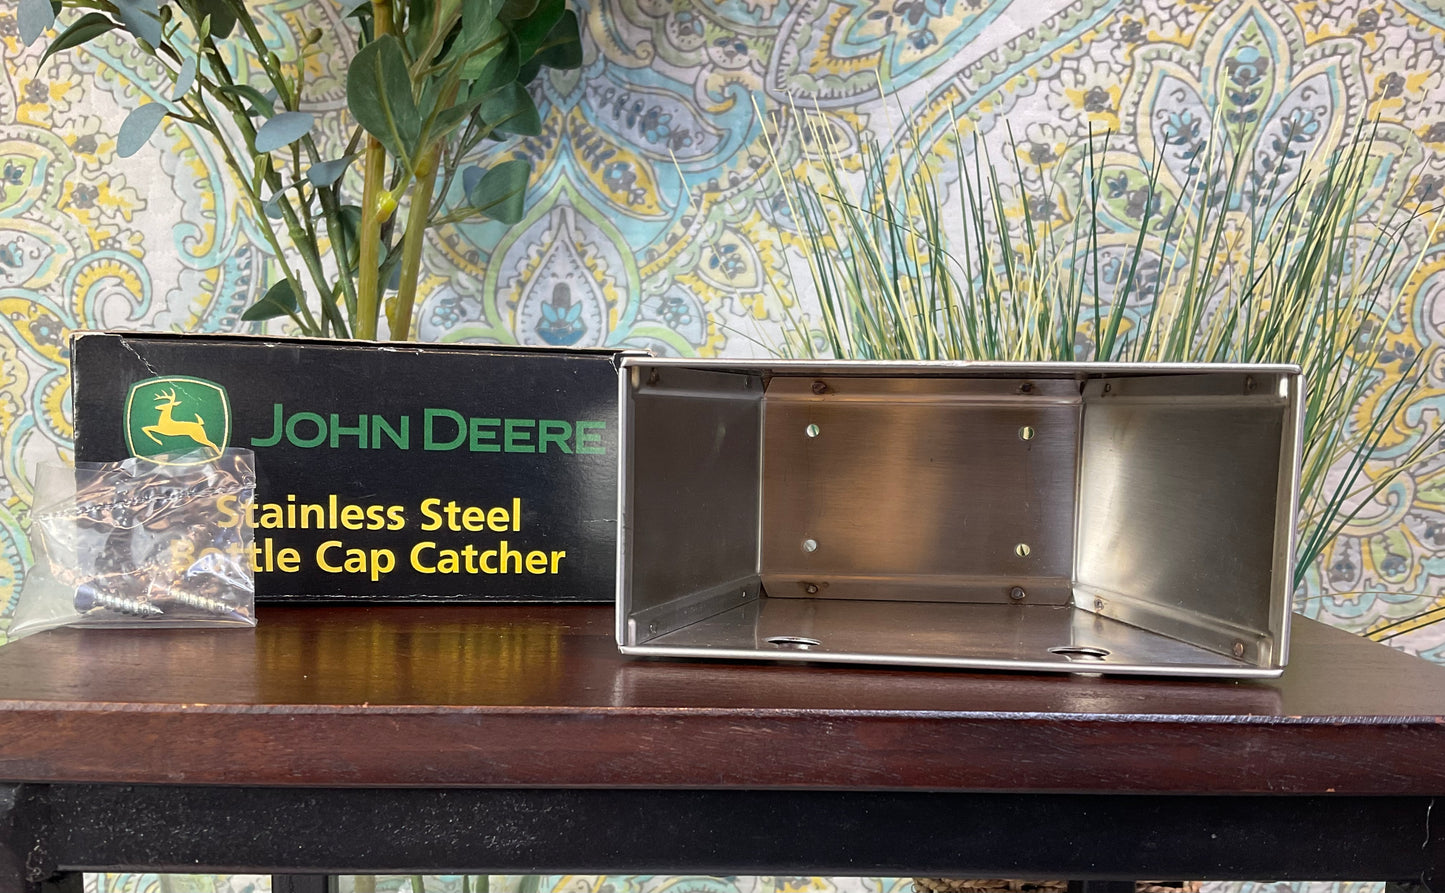 John Deere Stainless Steel Bottle Cap Catcher